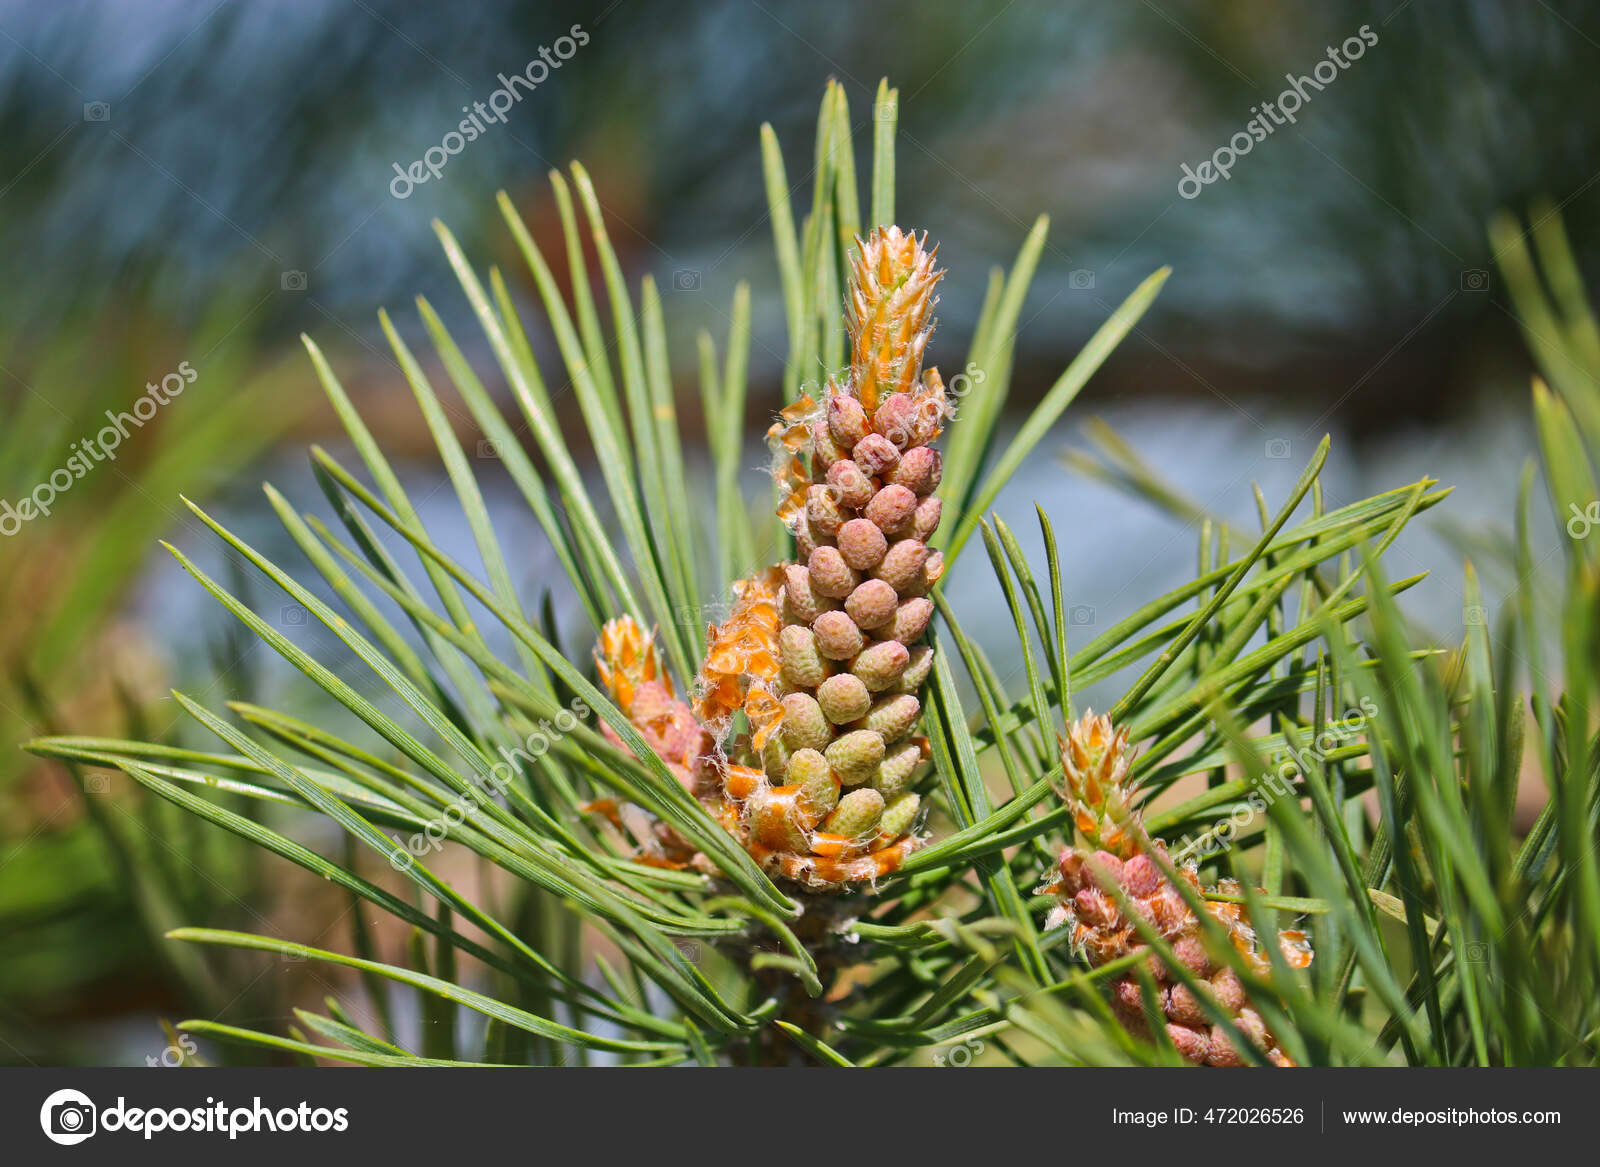 https://st2.depositphotos.com/4550233/47202/i/1600/depositphotos_472026526-stock-photo-male-pine-cones-pinus-sylvestris.jpg